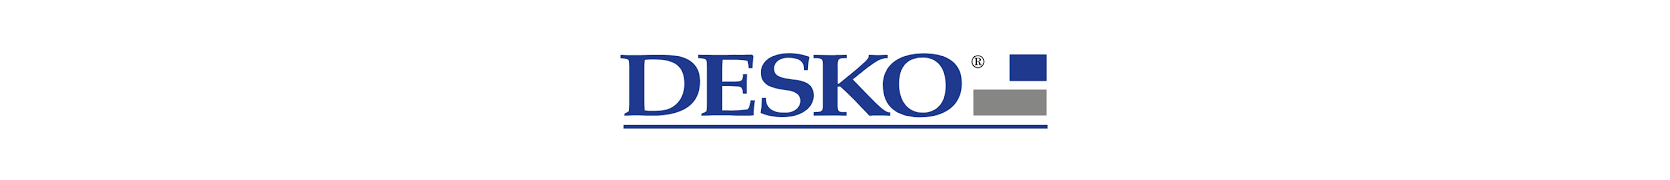 DESKO Kundenlogos Banner 2021_.png